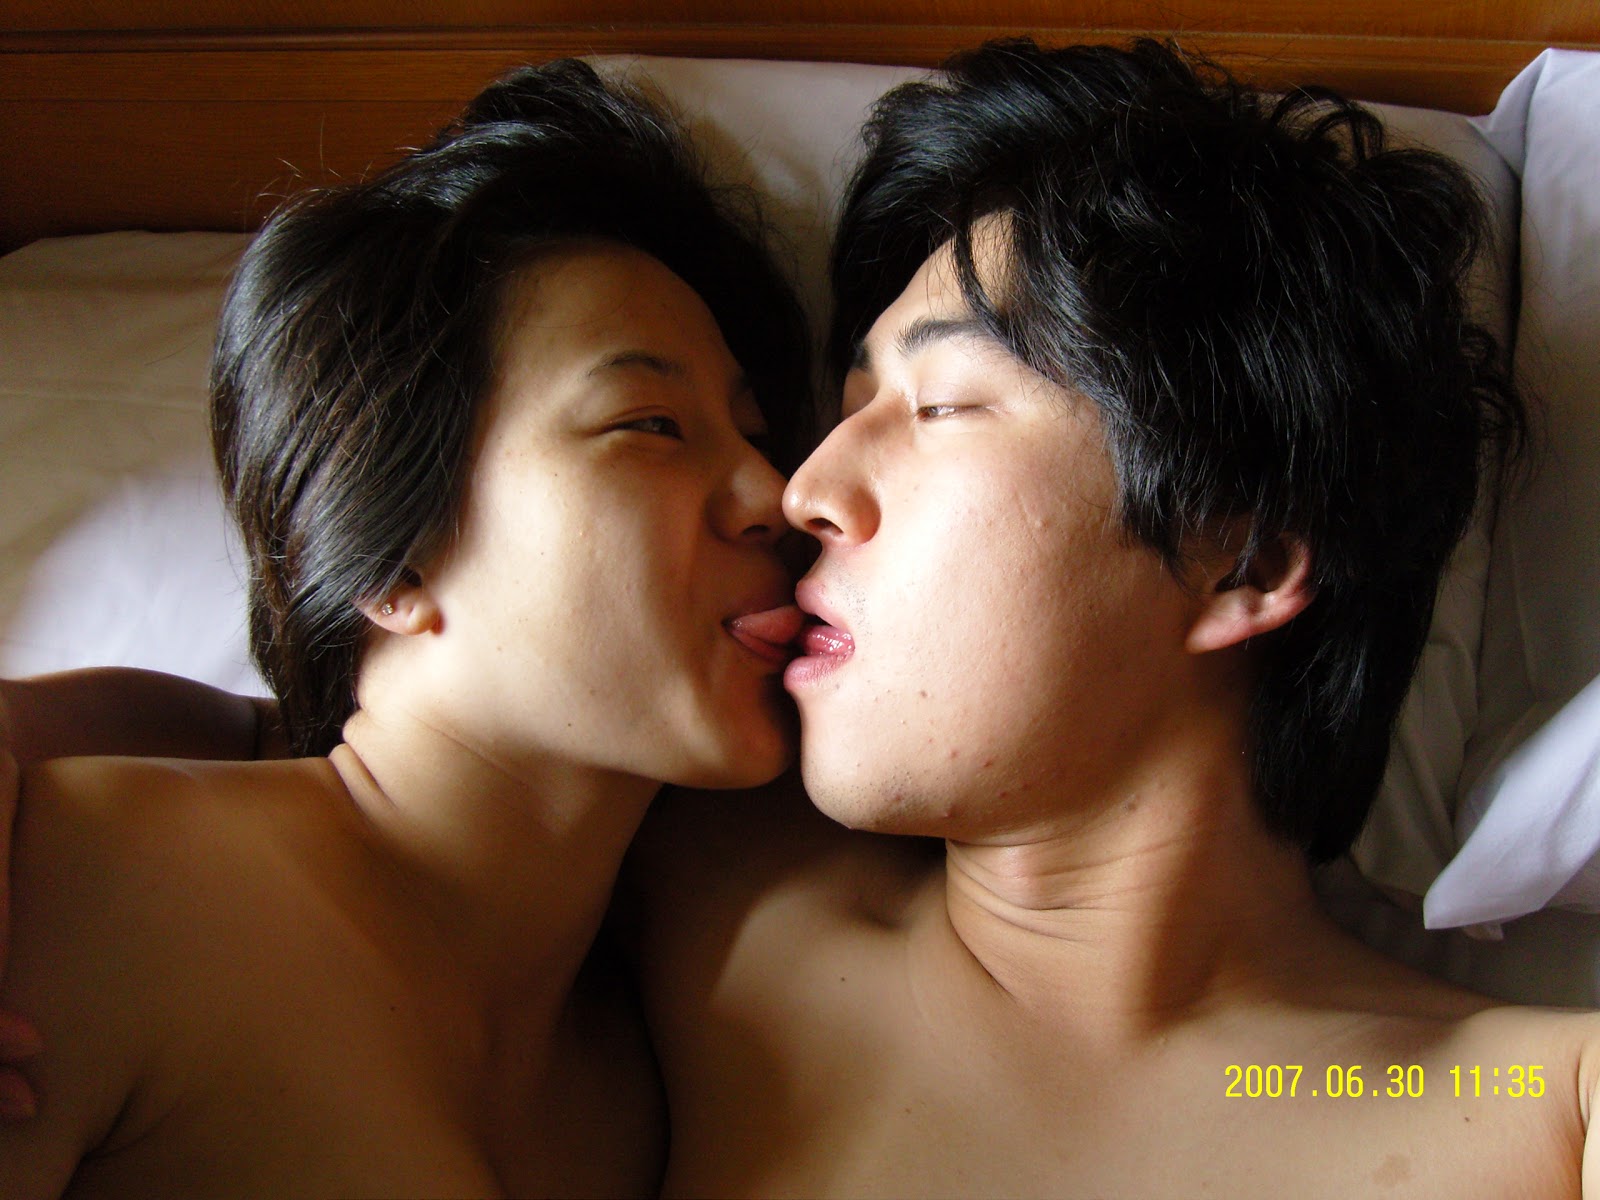 Super Lovely Korean Girlfriend S Big Boobs And Muff Photos Leaked 25pix Gutteruncensored